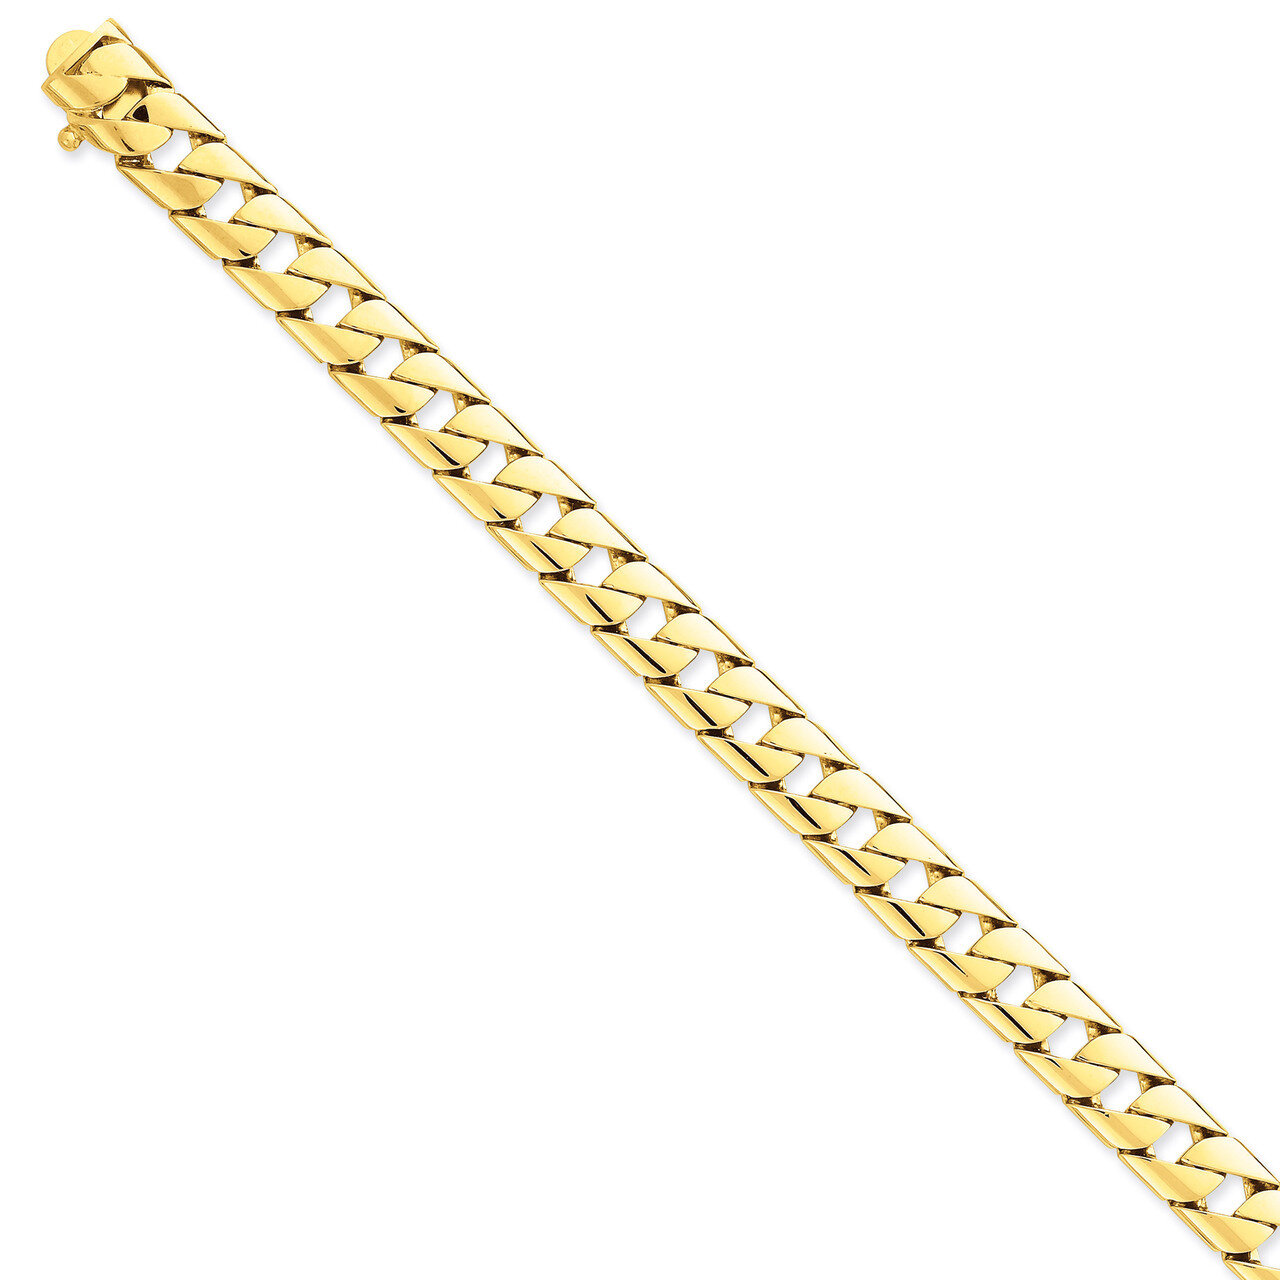 10mm Hand-Polished Fancy Link Chain 24 Inch 14k Gold LK141-24